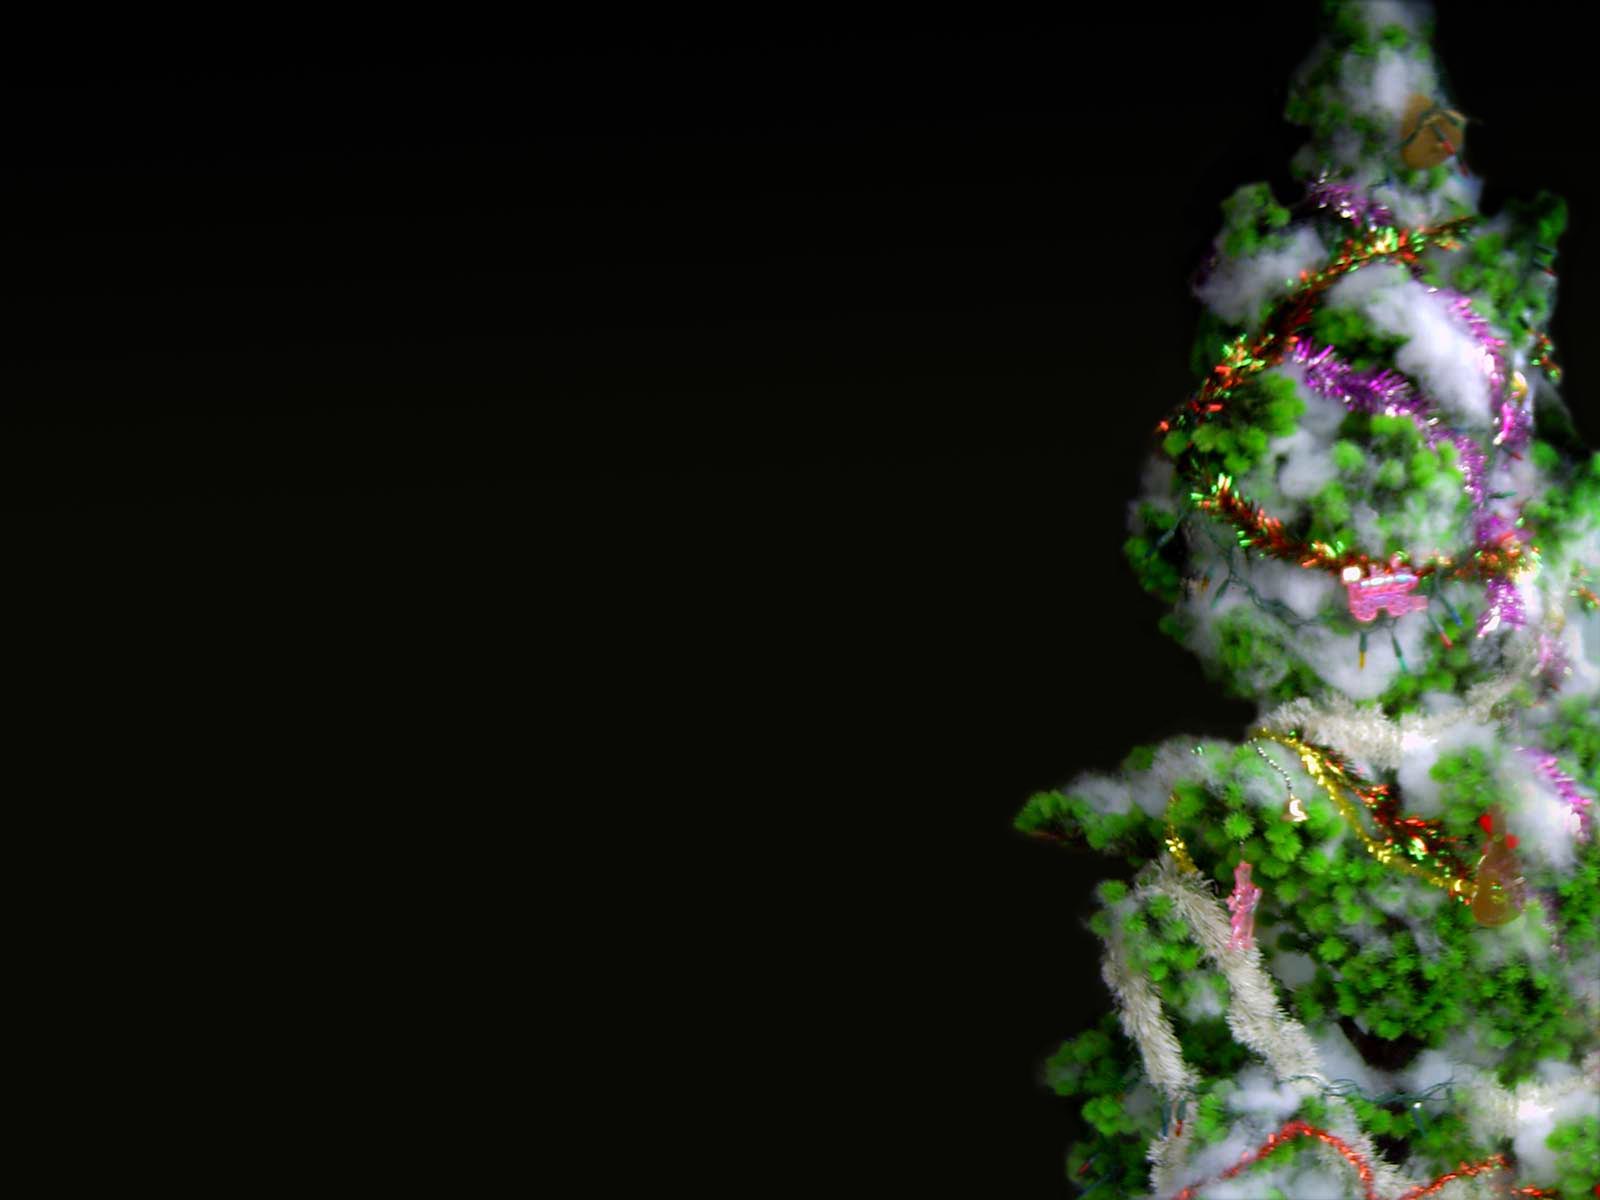 Black Background Photos Of Best Christmas Theme Wallpaper For Desktop